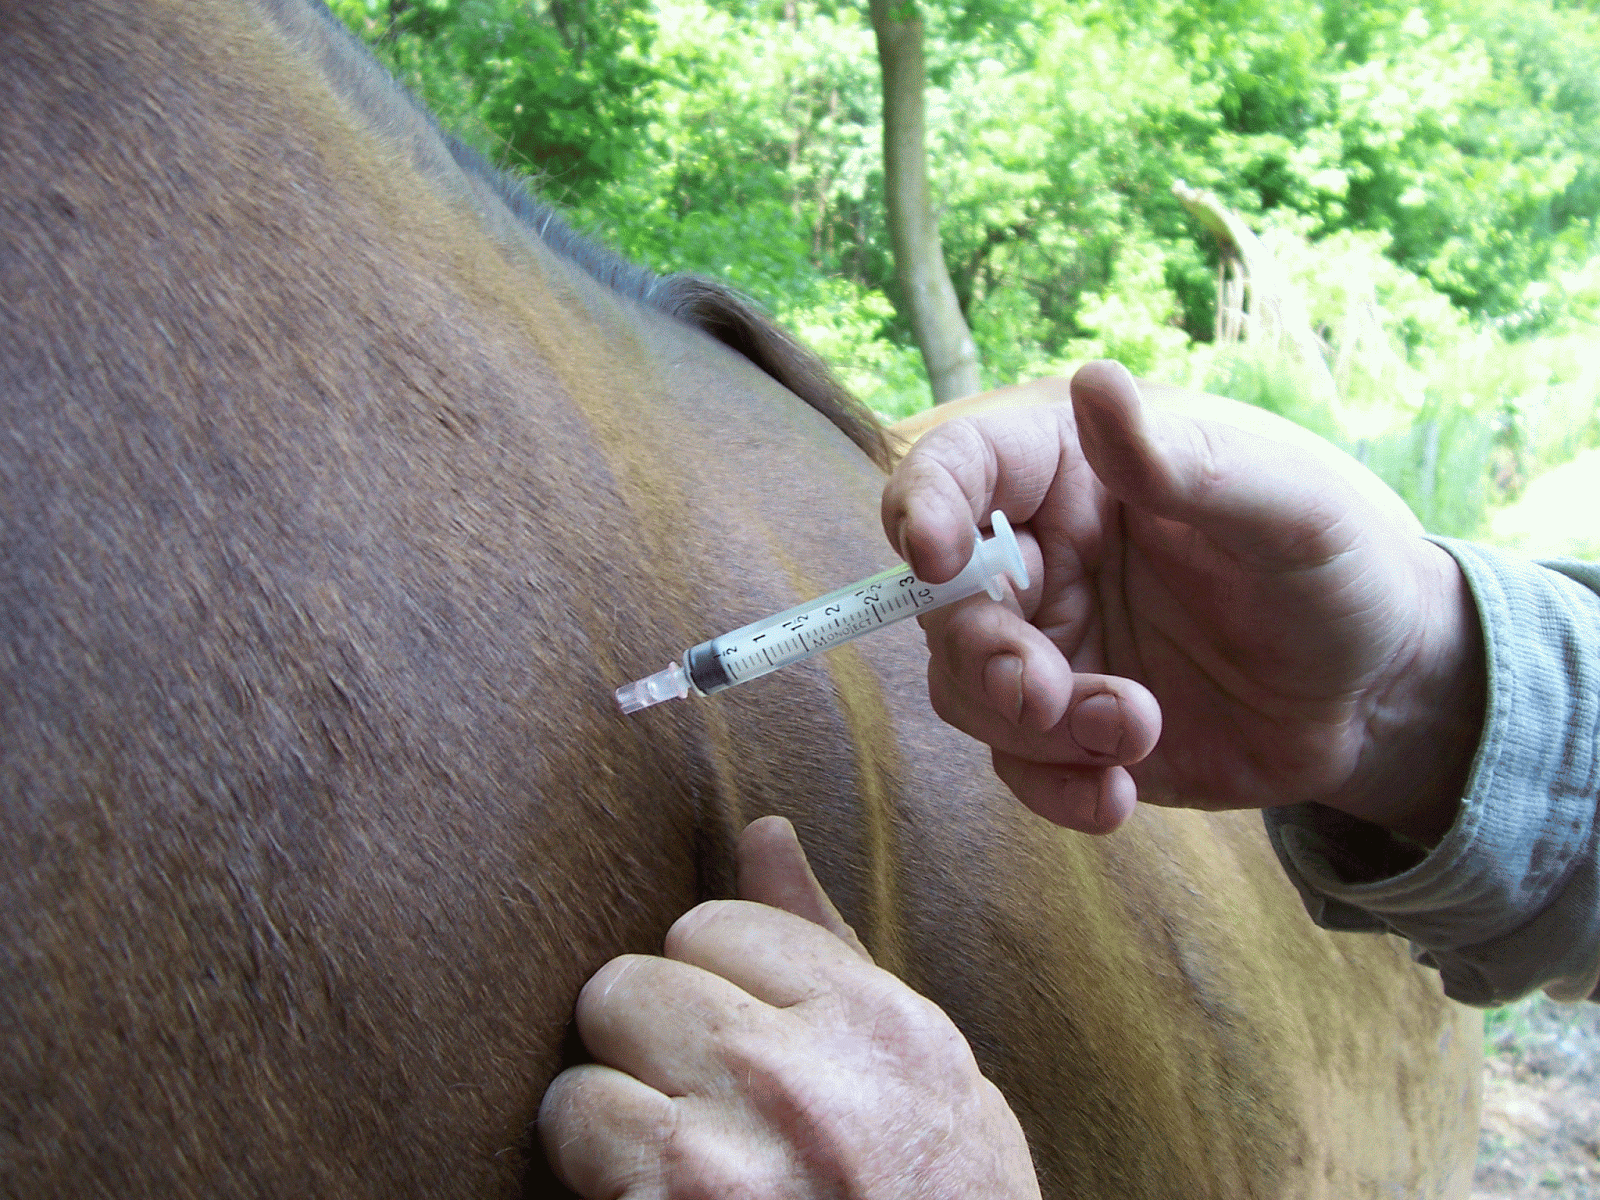 Знахарь лечивший лошадей. Лептоспироз лошадей вакцина. Вакцинация лошадей.